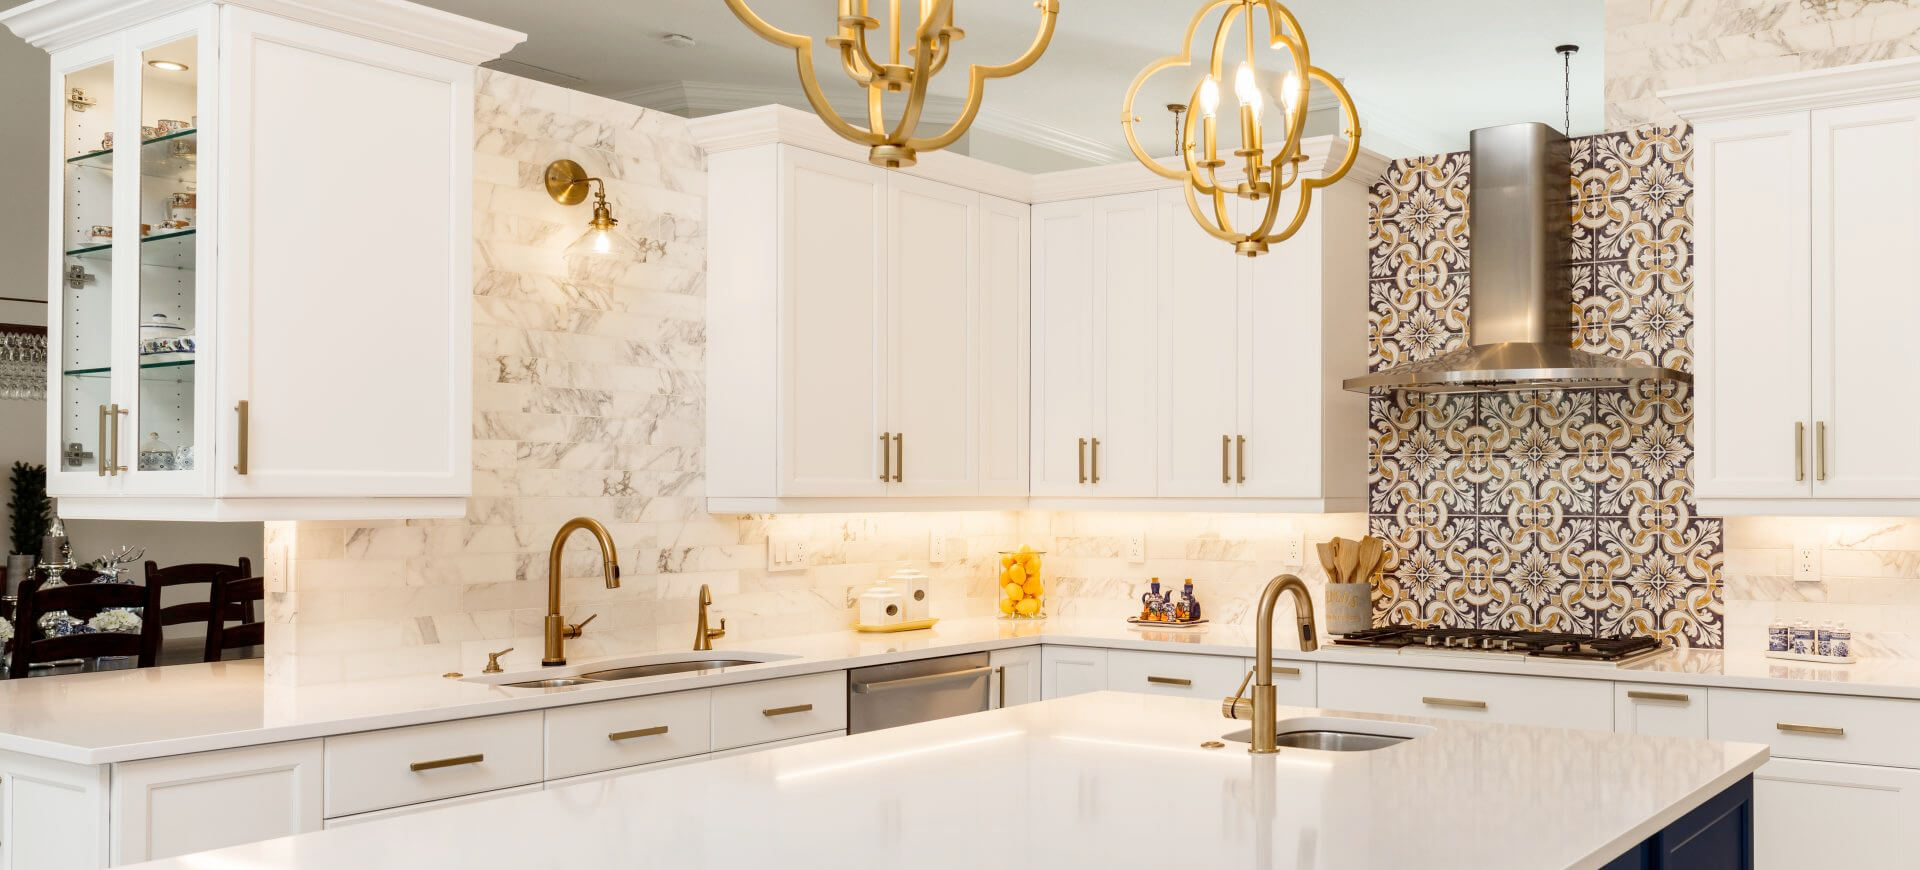 Gold and white kitchen